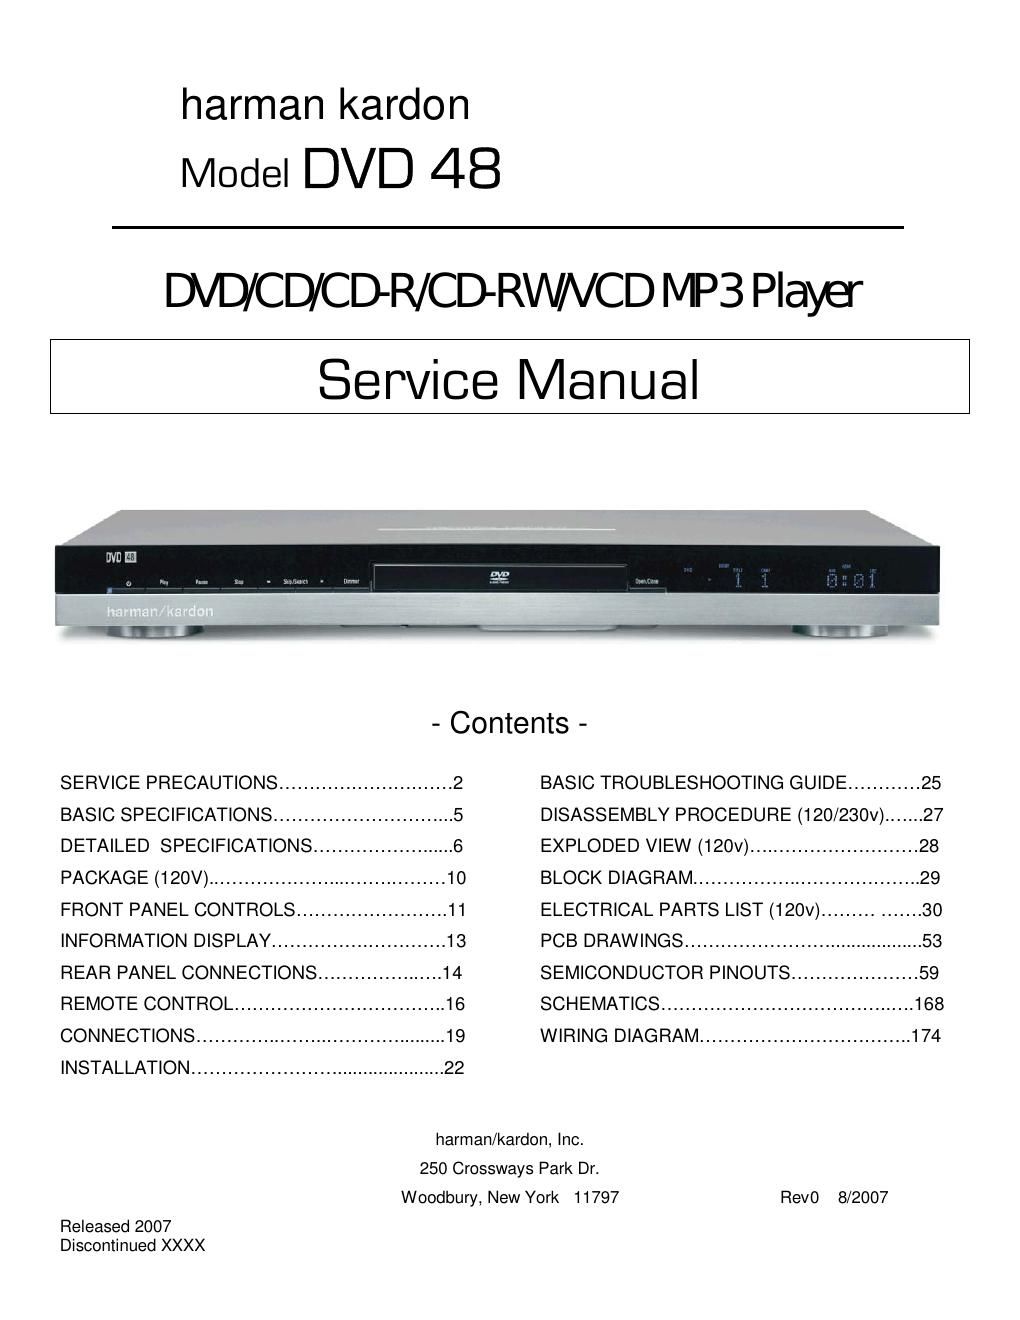 harman kardon dvd 48 service manual